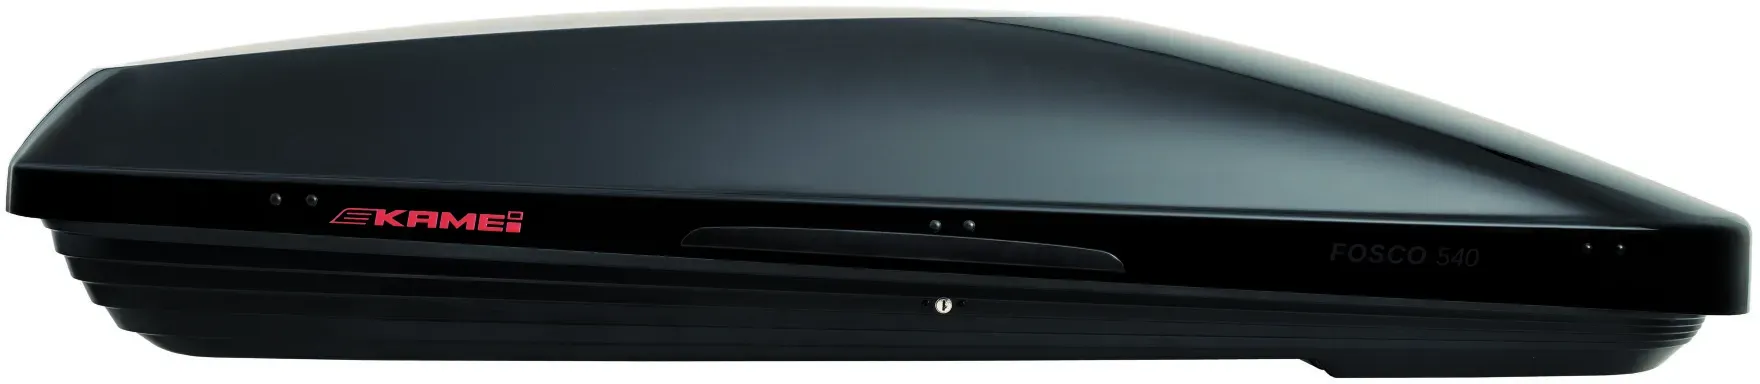 Dachbox Kamei Fosco 540 schwarz matt Außenmaße LxBxH: 215x94x44cm Duo-Lift Öffnungssystem 08154101